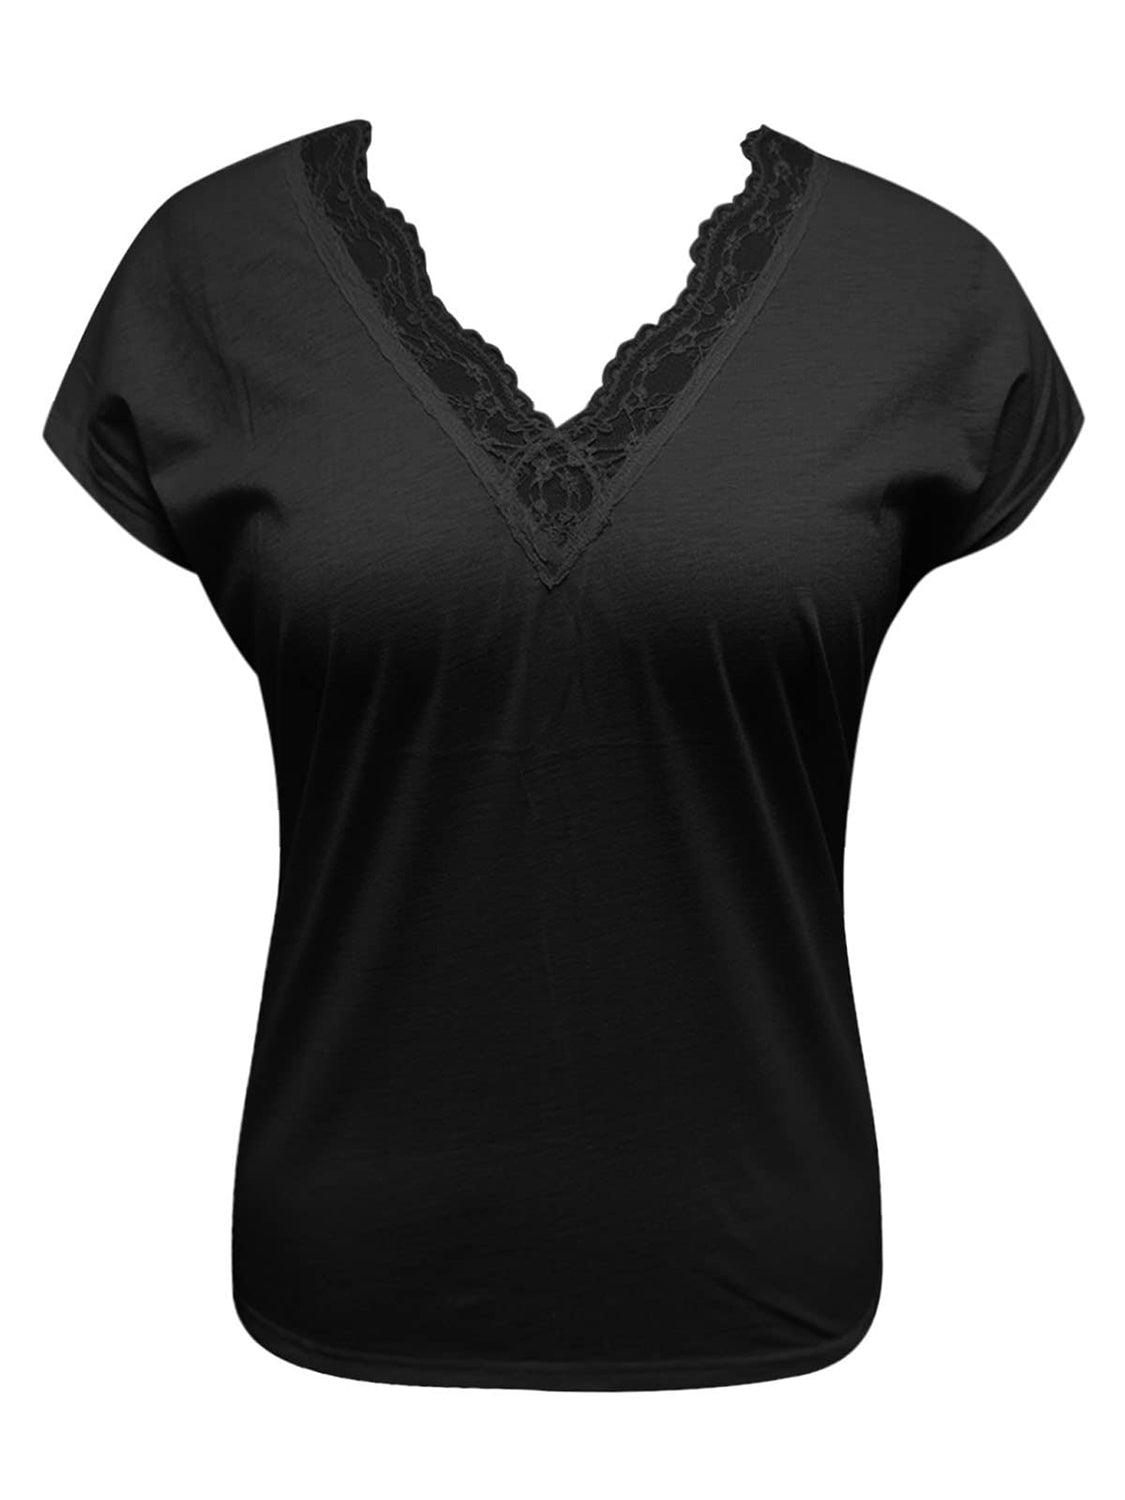 a women's black shirt with a lace trim